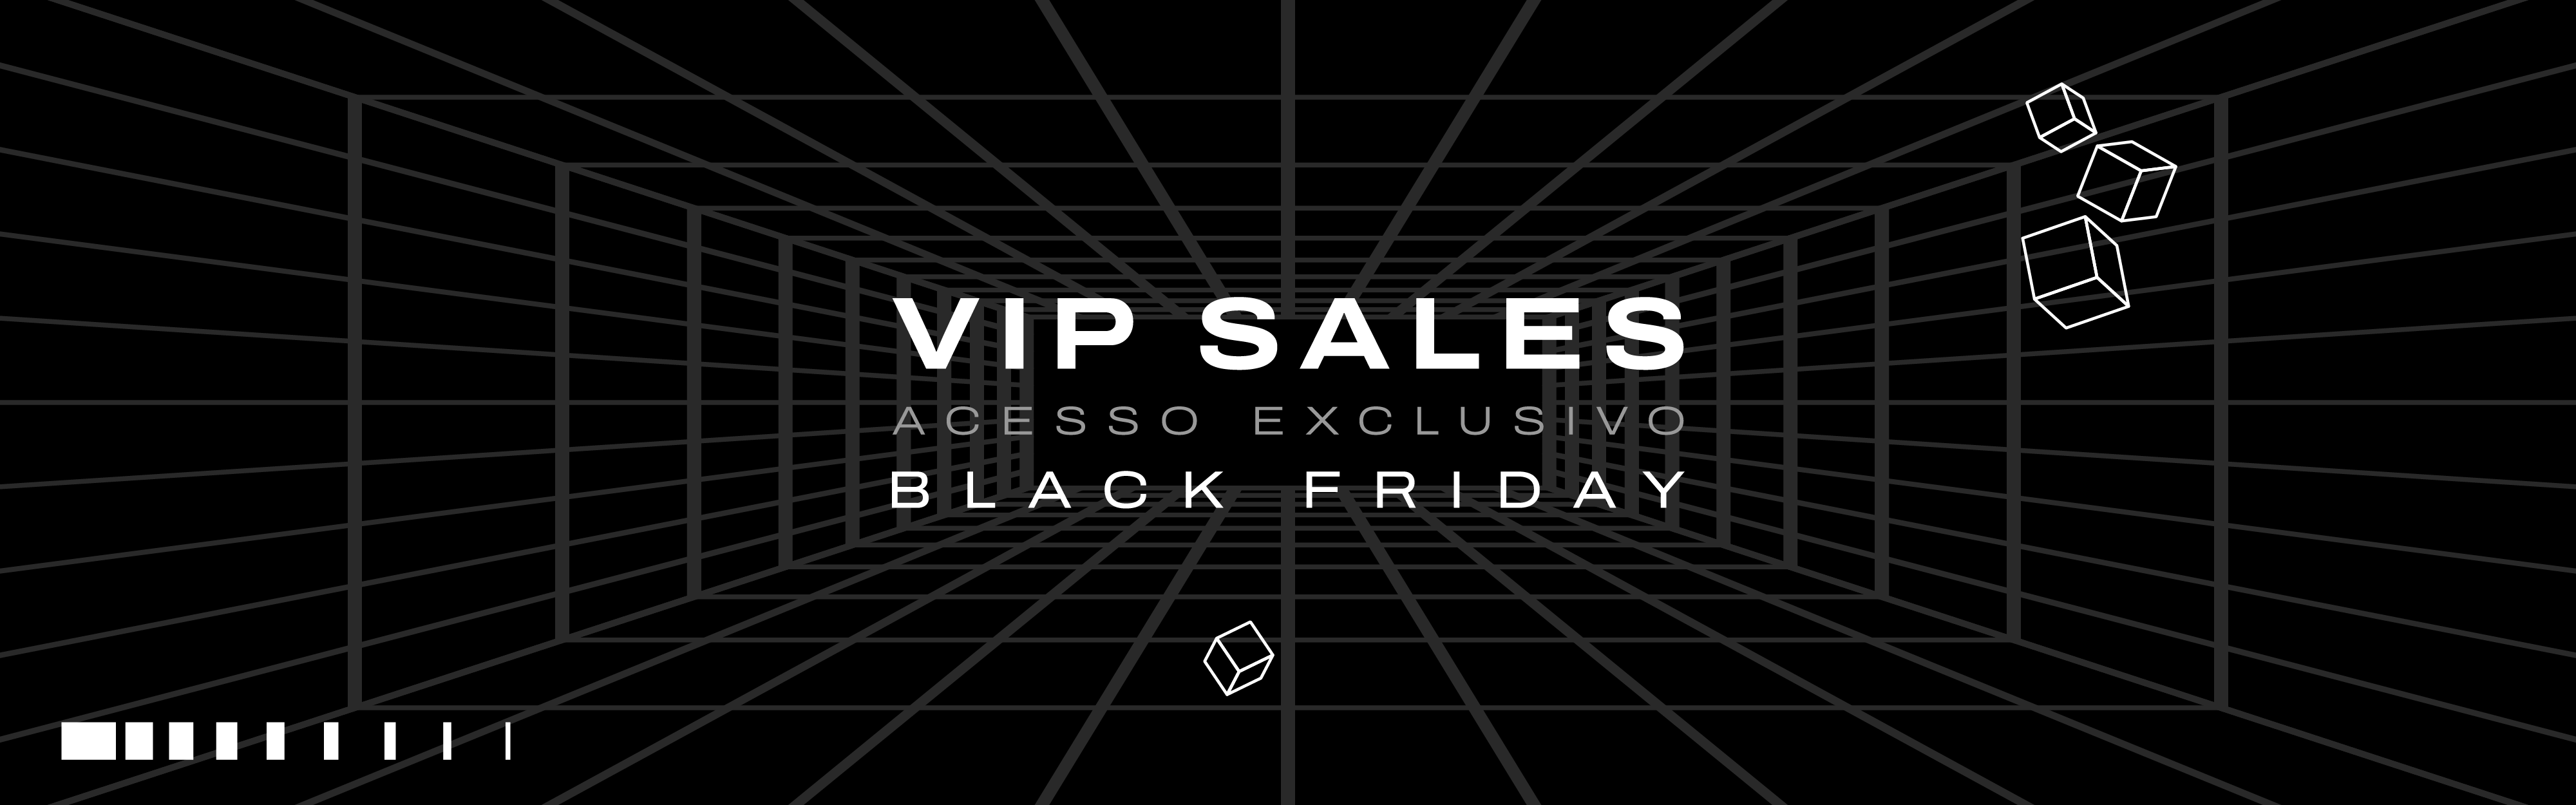 Banner Desktop da Vip Sales Black Friday